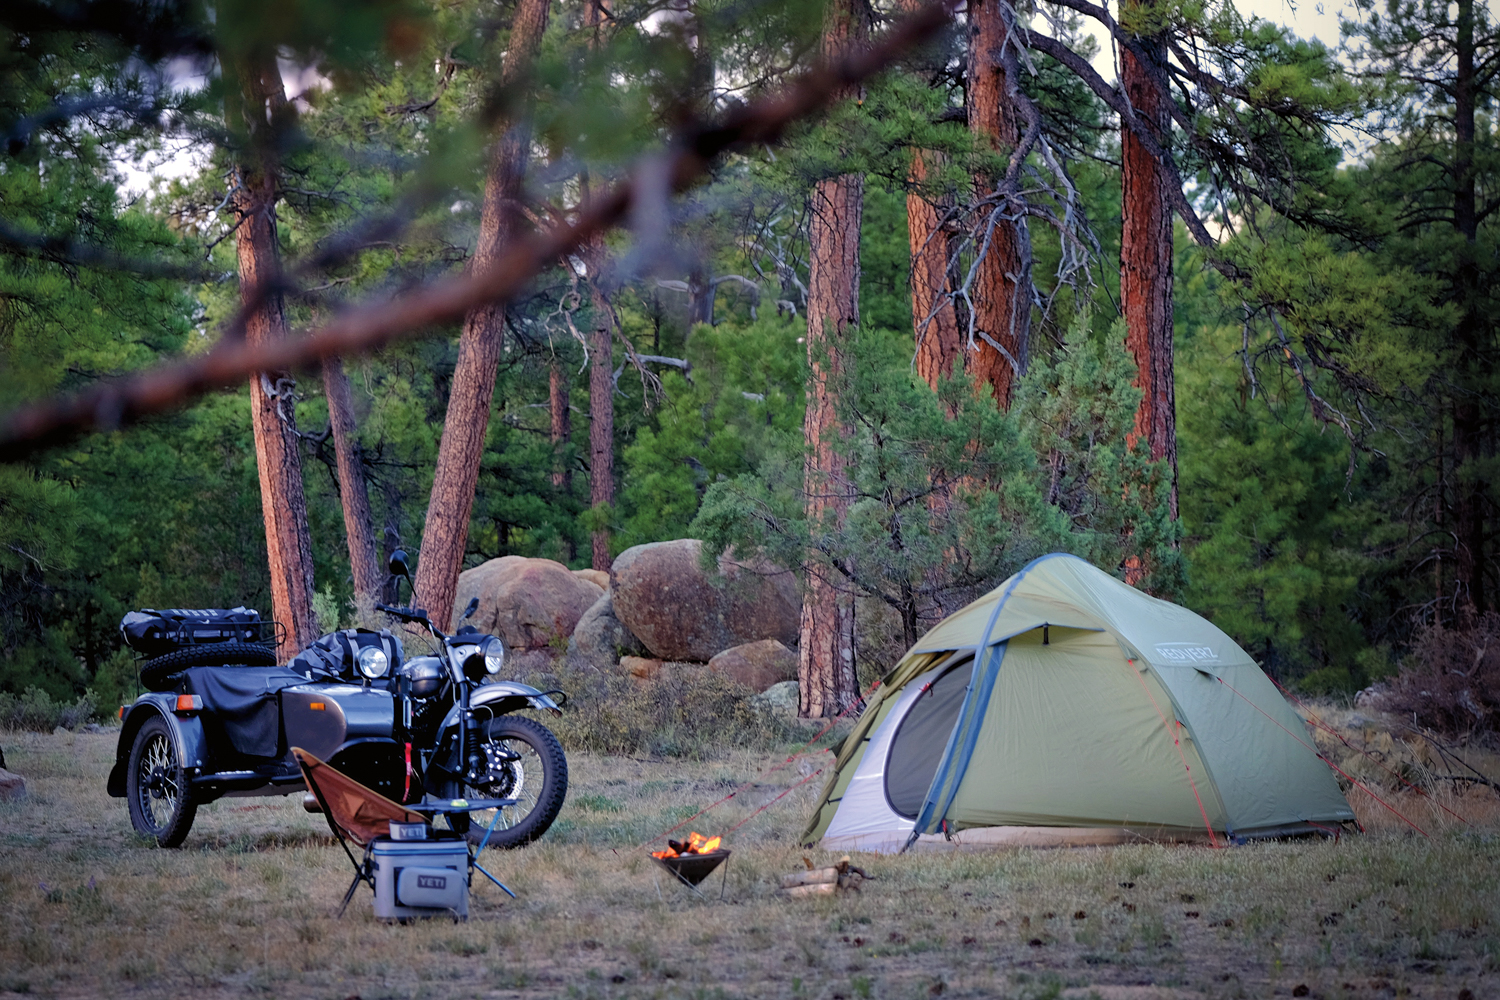 Camping rus. Мотоцикл Урал кемпинг. Палатка в лесу. Палатка для кемпинга на мотоцикл. Палатка костер.